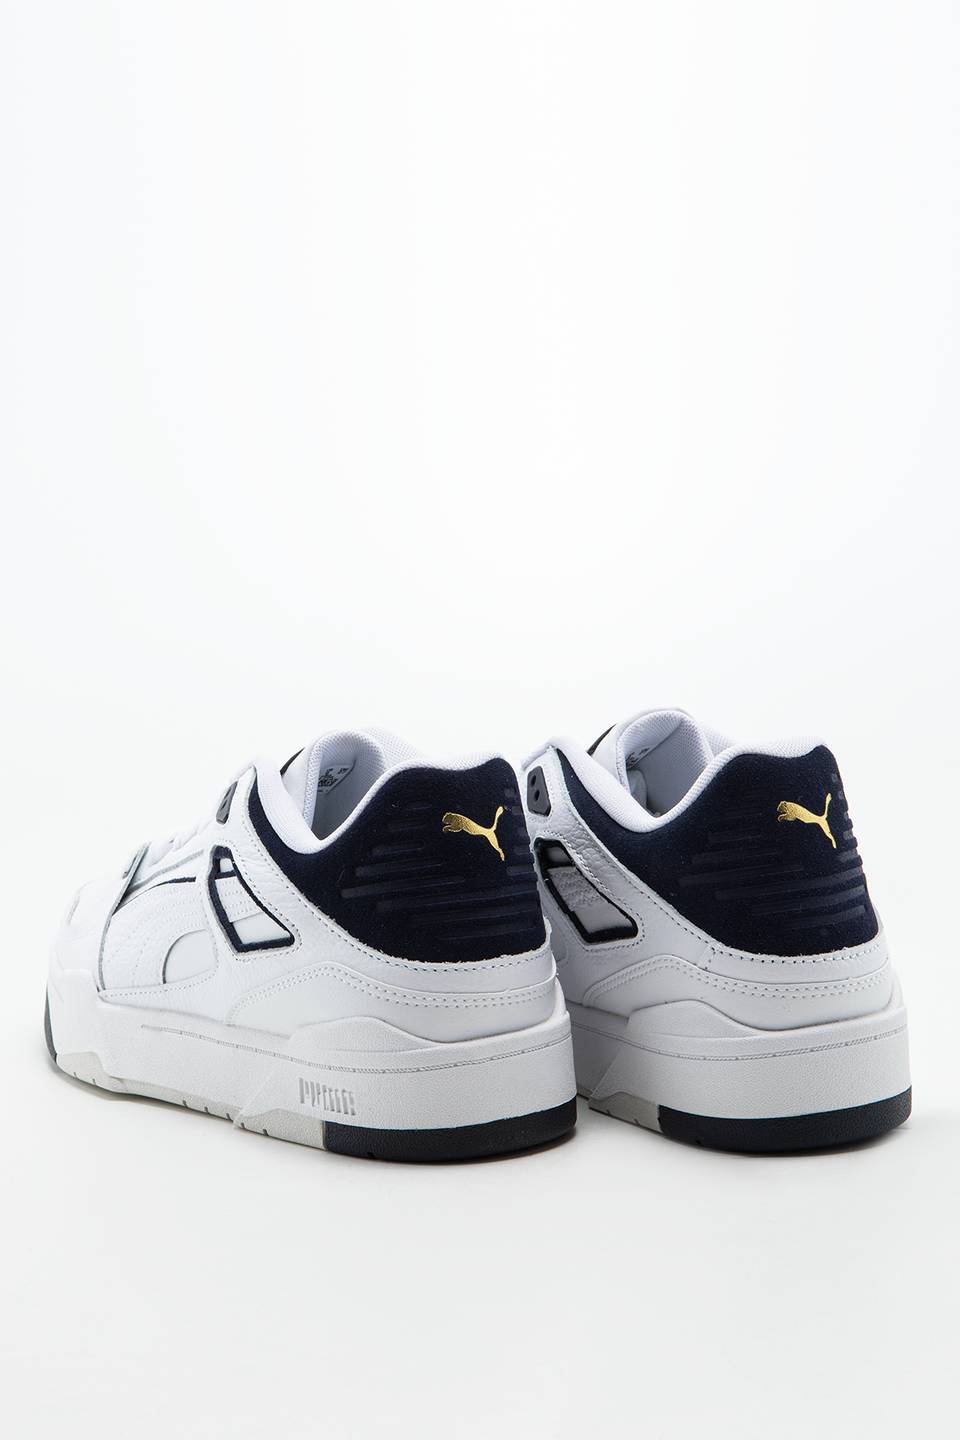 Sneakers Puma Slipstream  White-Peacoat-Nimbus Clo 38854904